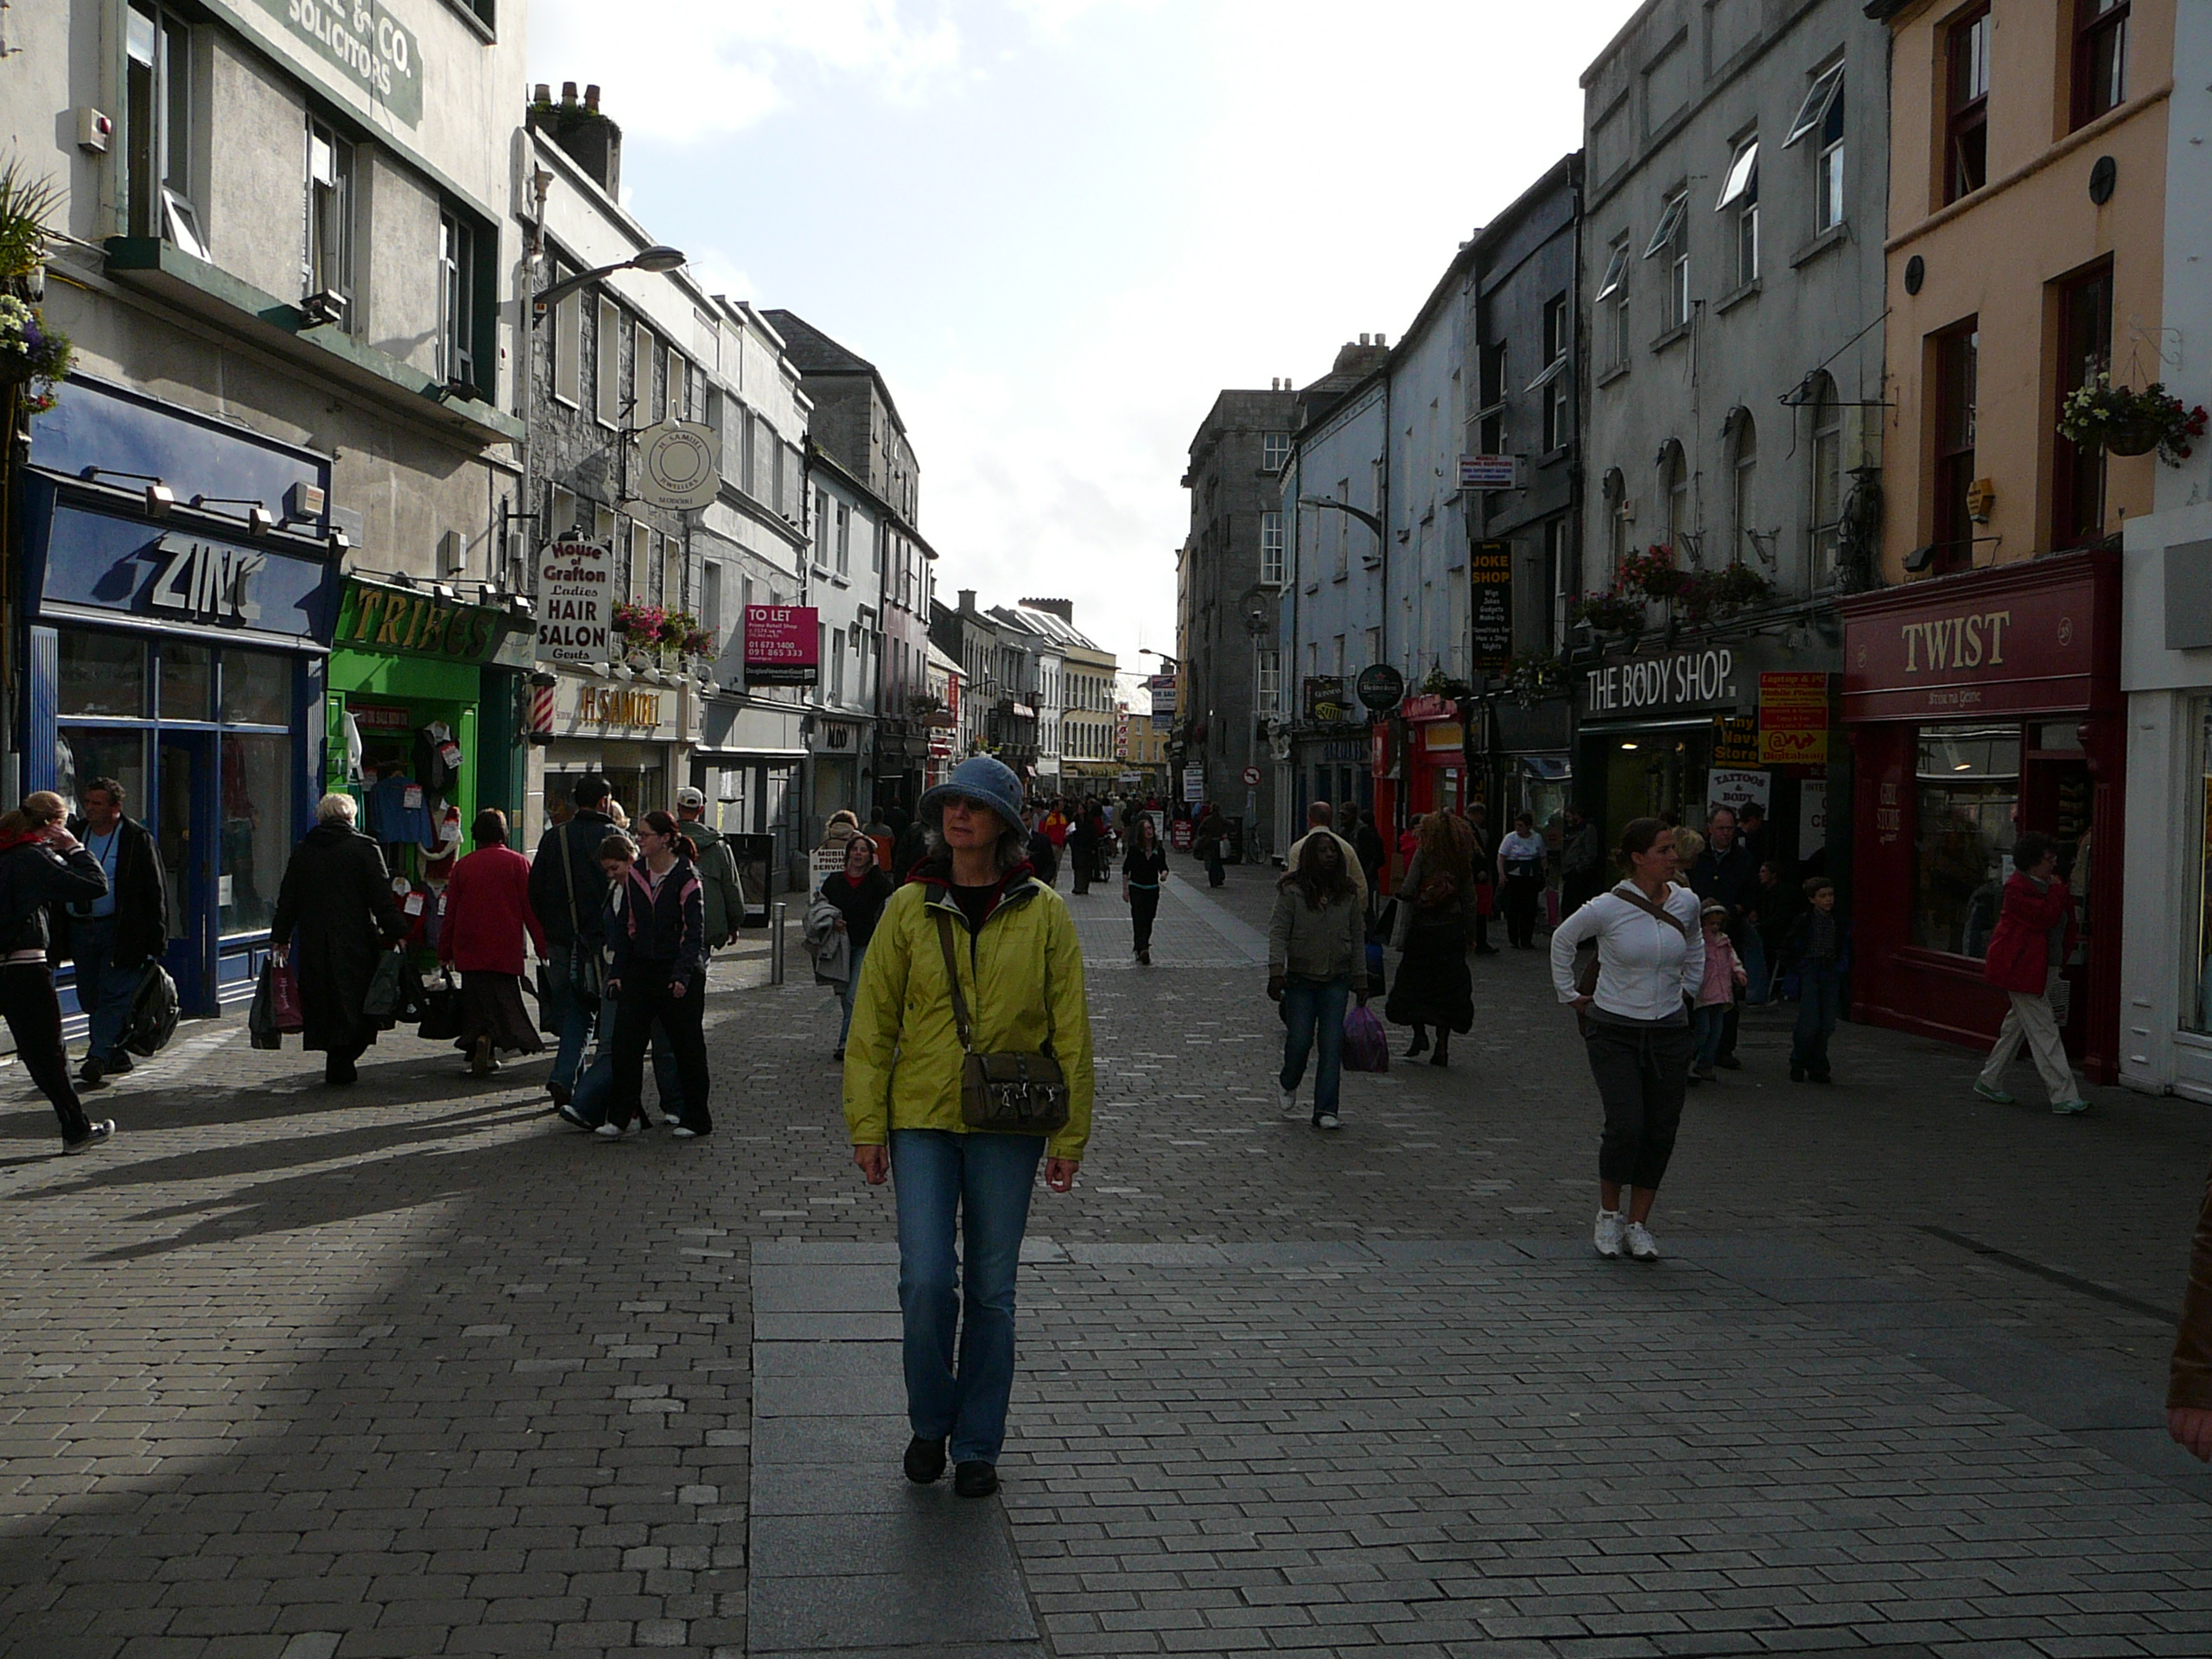 In Galway, Ireland